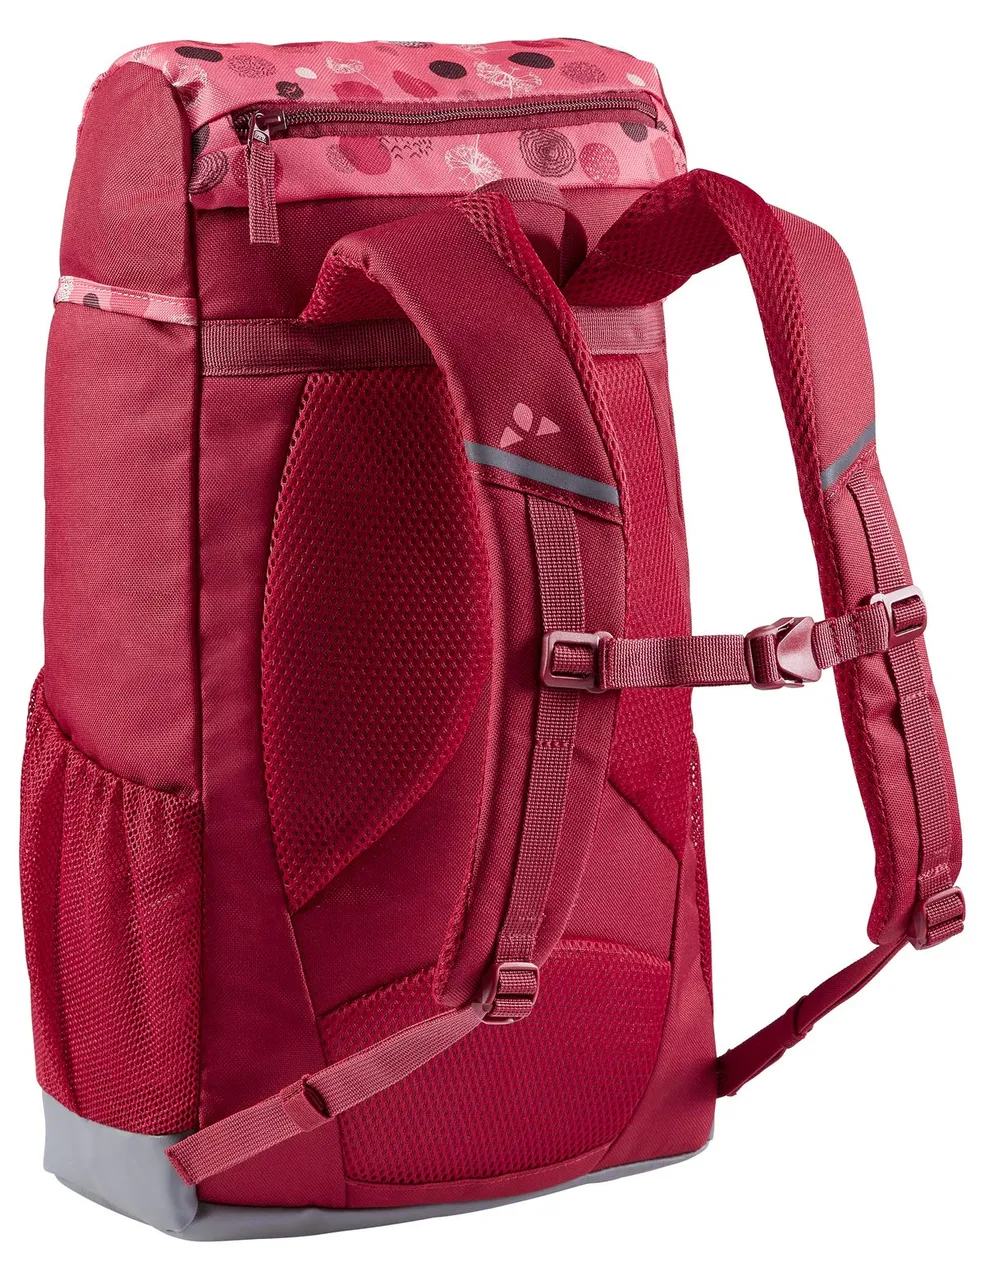 Handtaschen lila/pink 15477 -